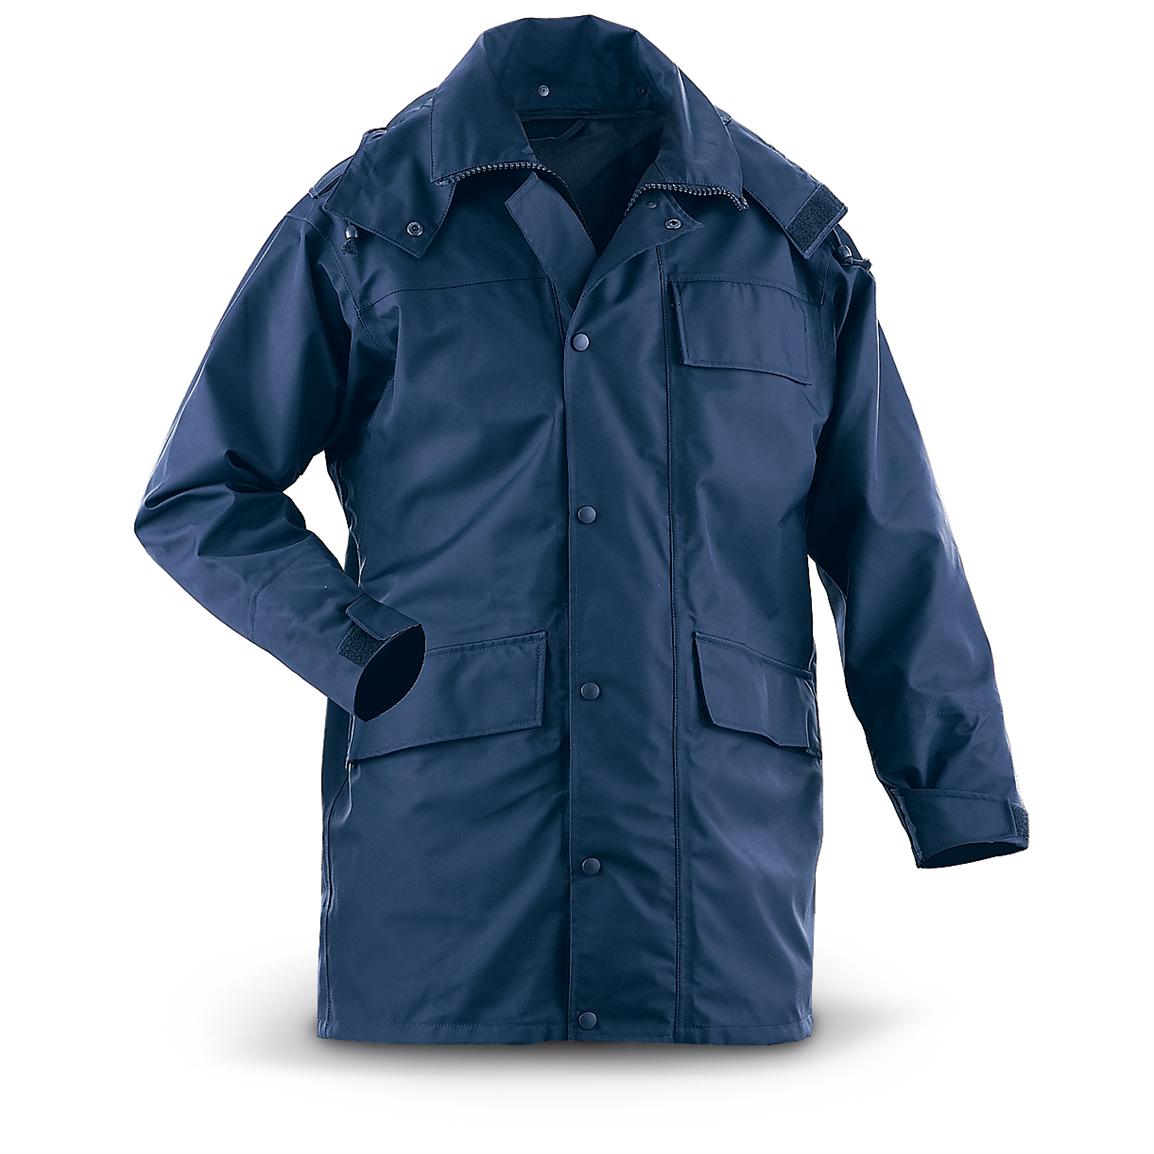 Used British Military Wet Weather Jacket, Navy - 176704, Rain Gear ...